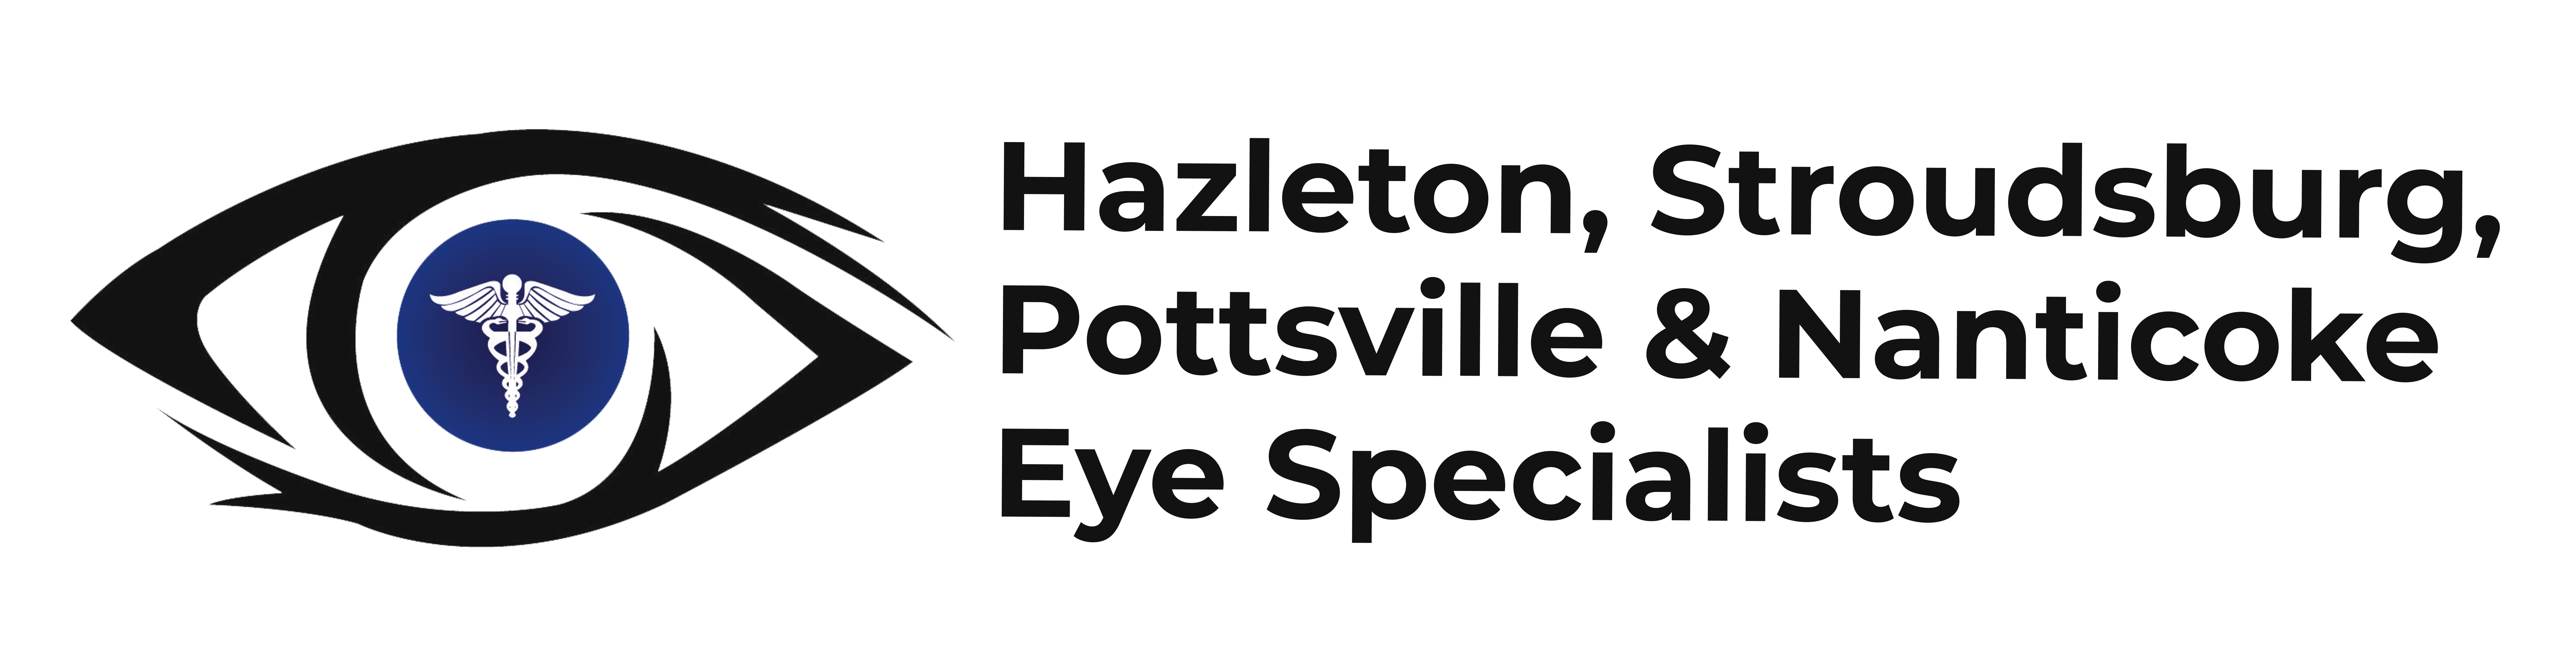 Hazleton, Stroudsburg, Pottsville & Nanticoke Eye Specialists in Pennsylvania